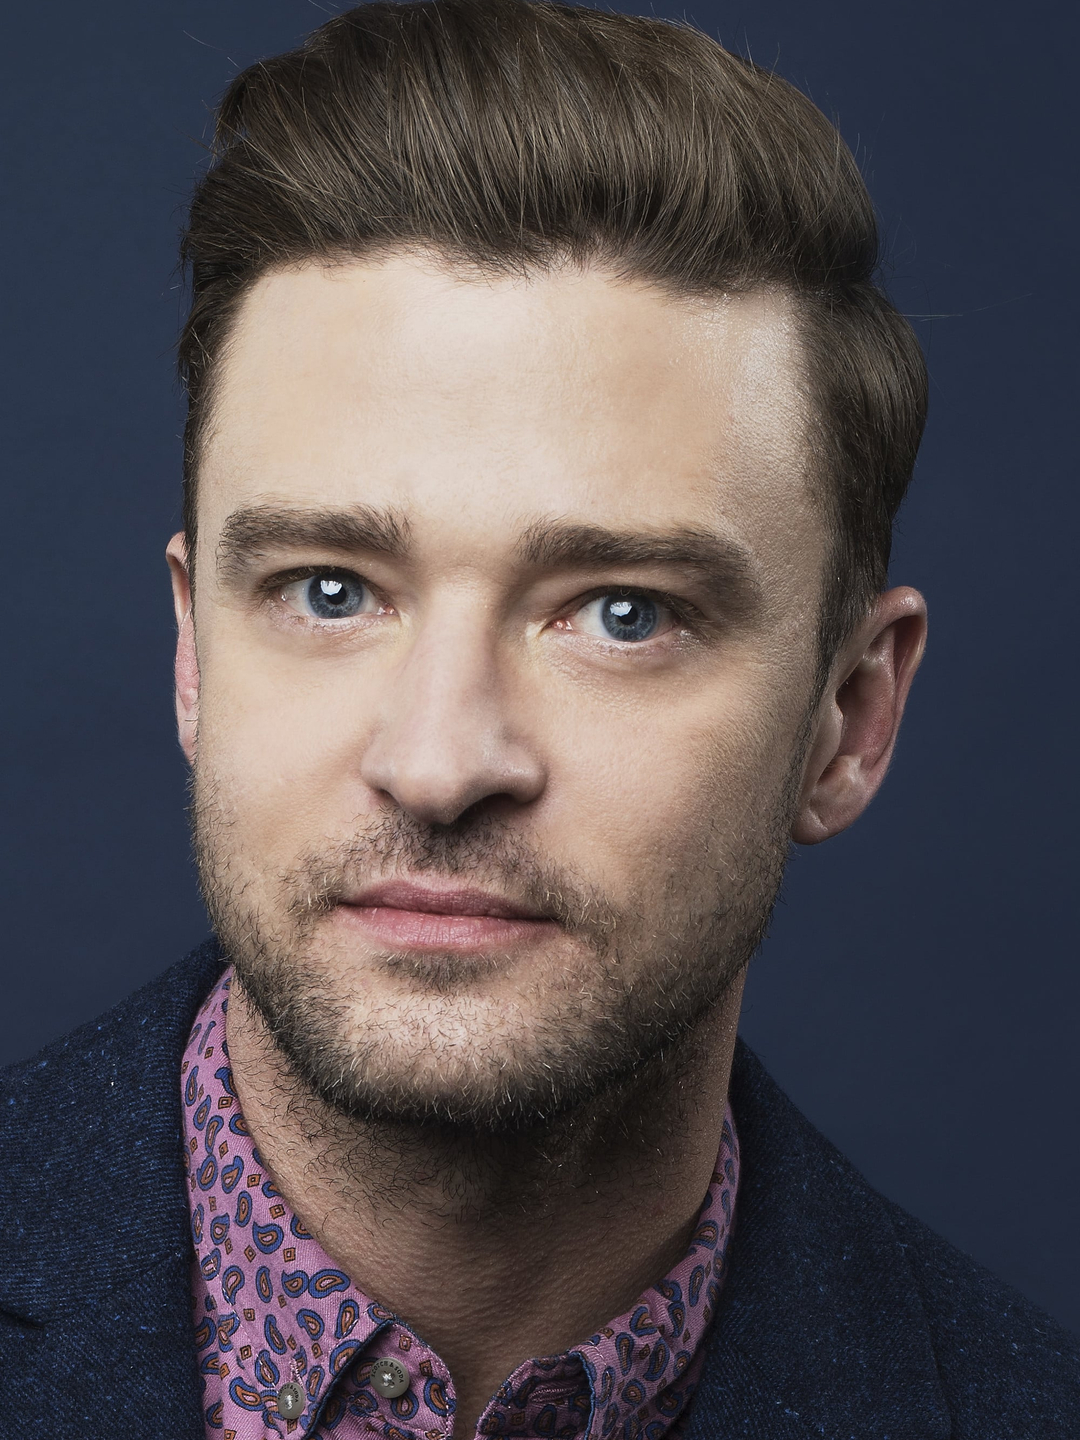 Justin Timberlake life path